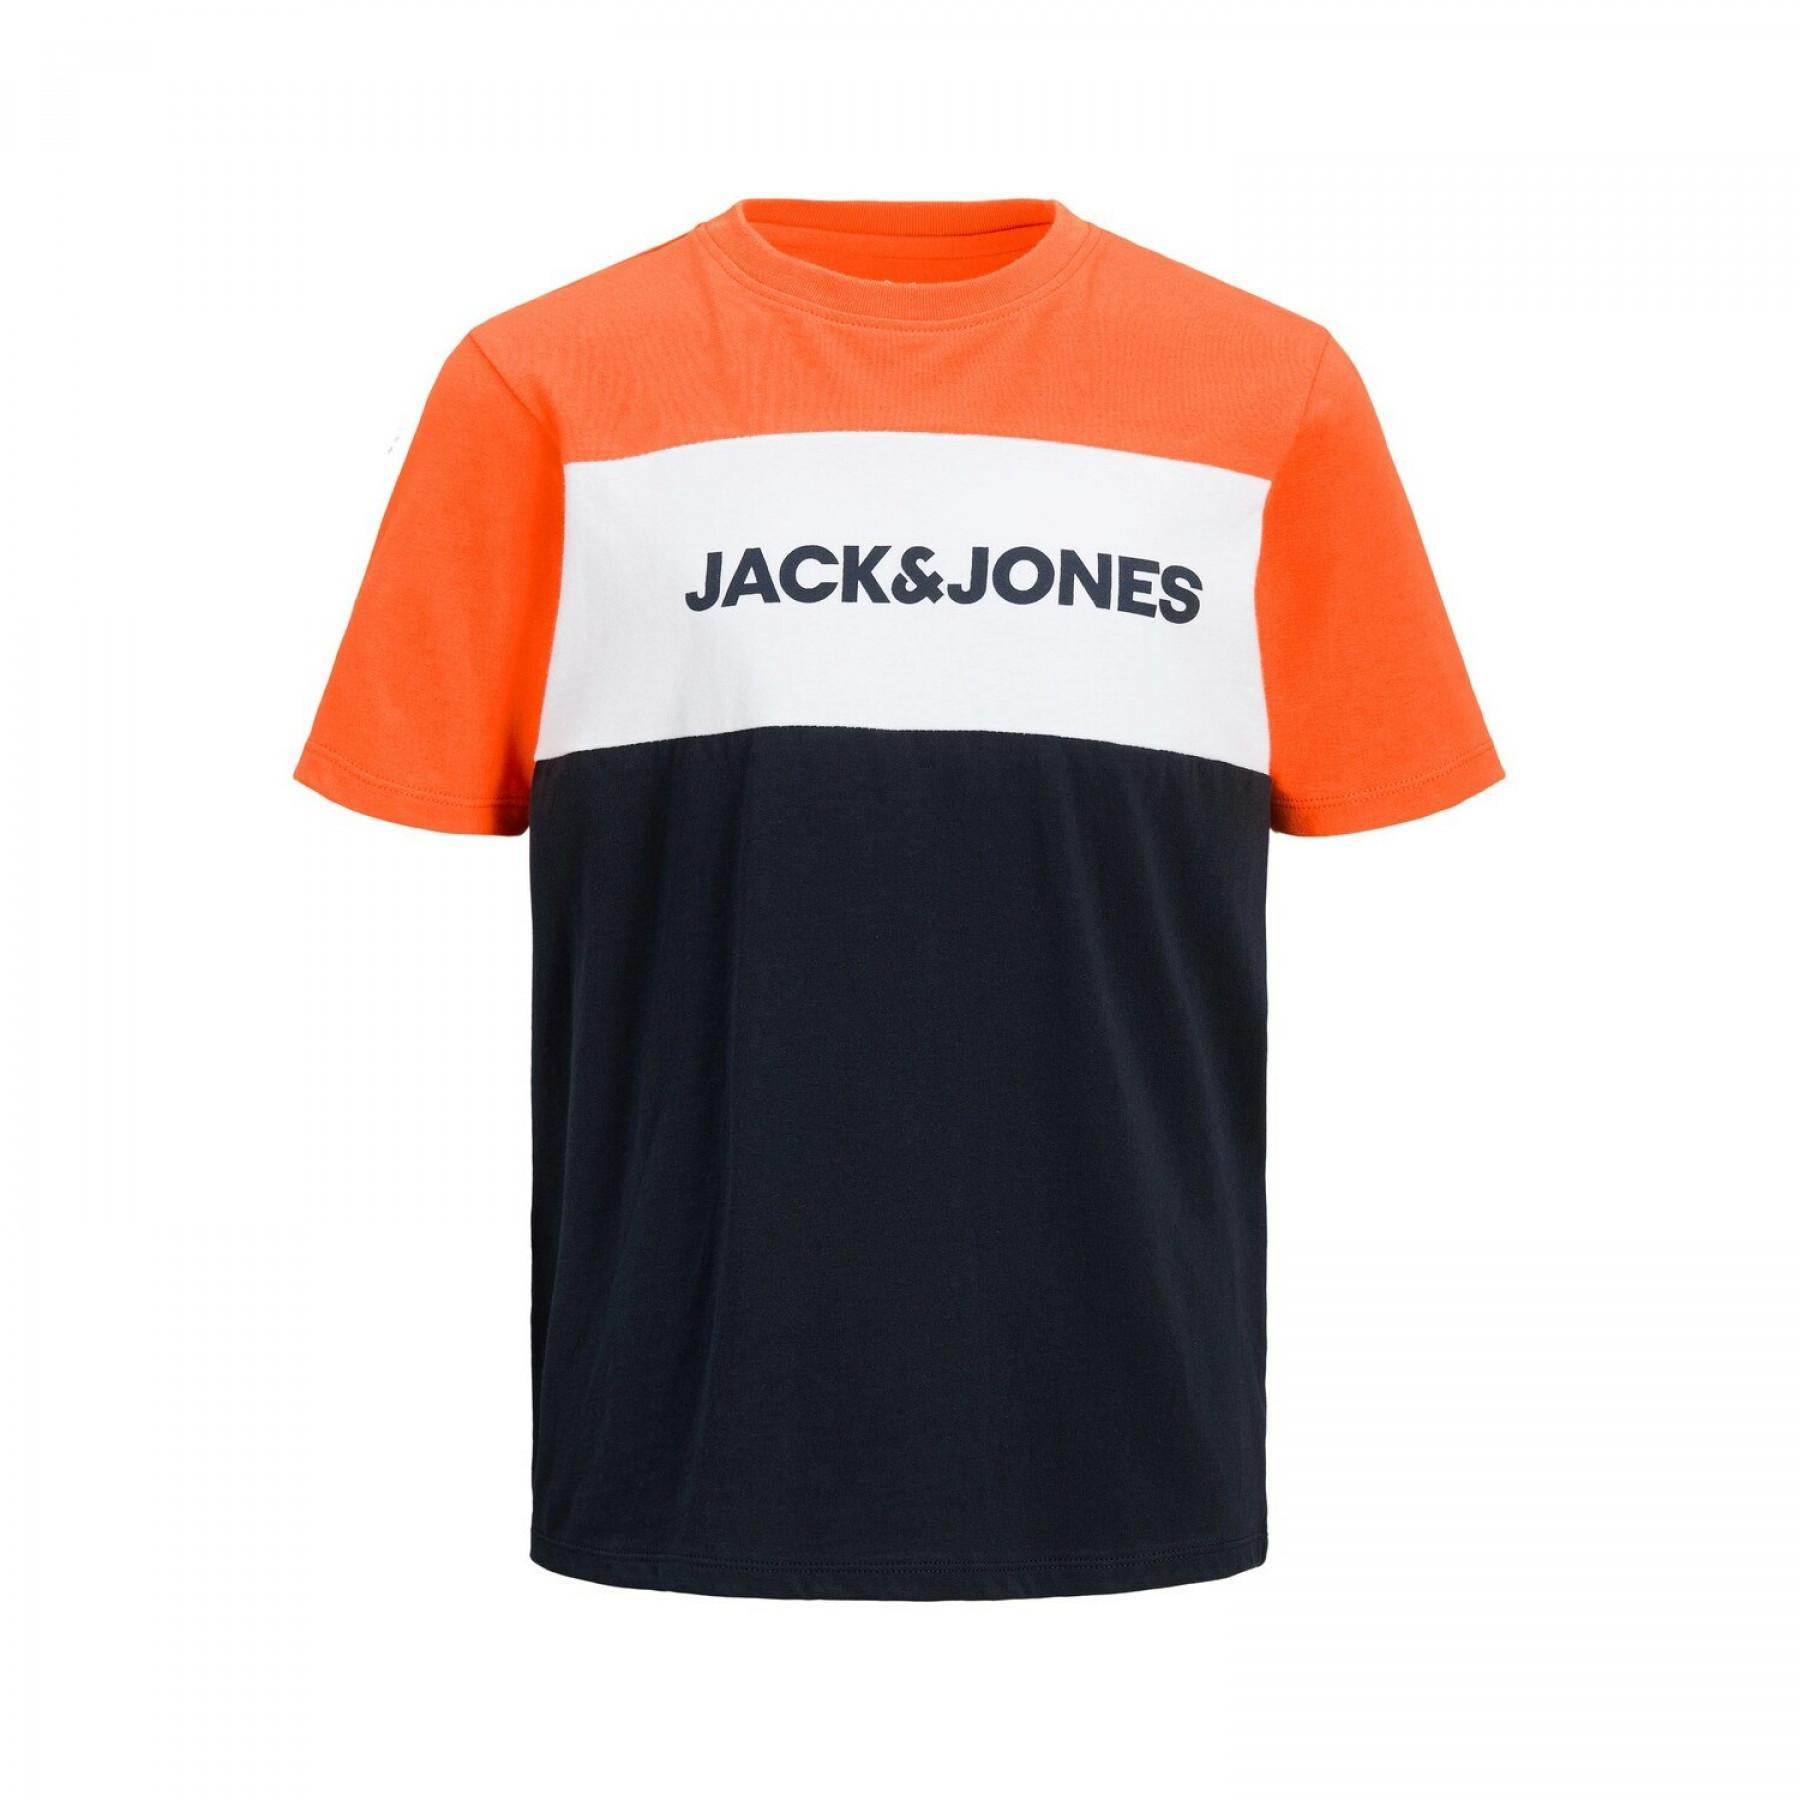 Child's T-shirt Jack & Jones neon logo blocking